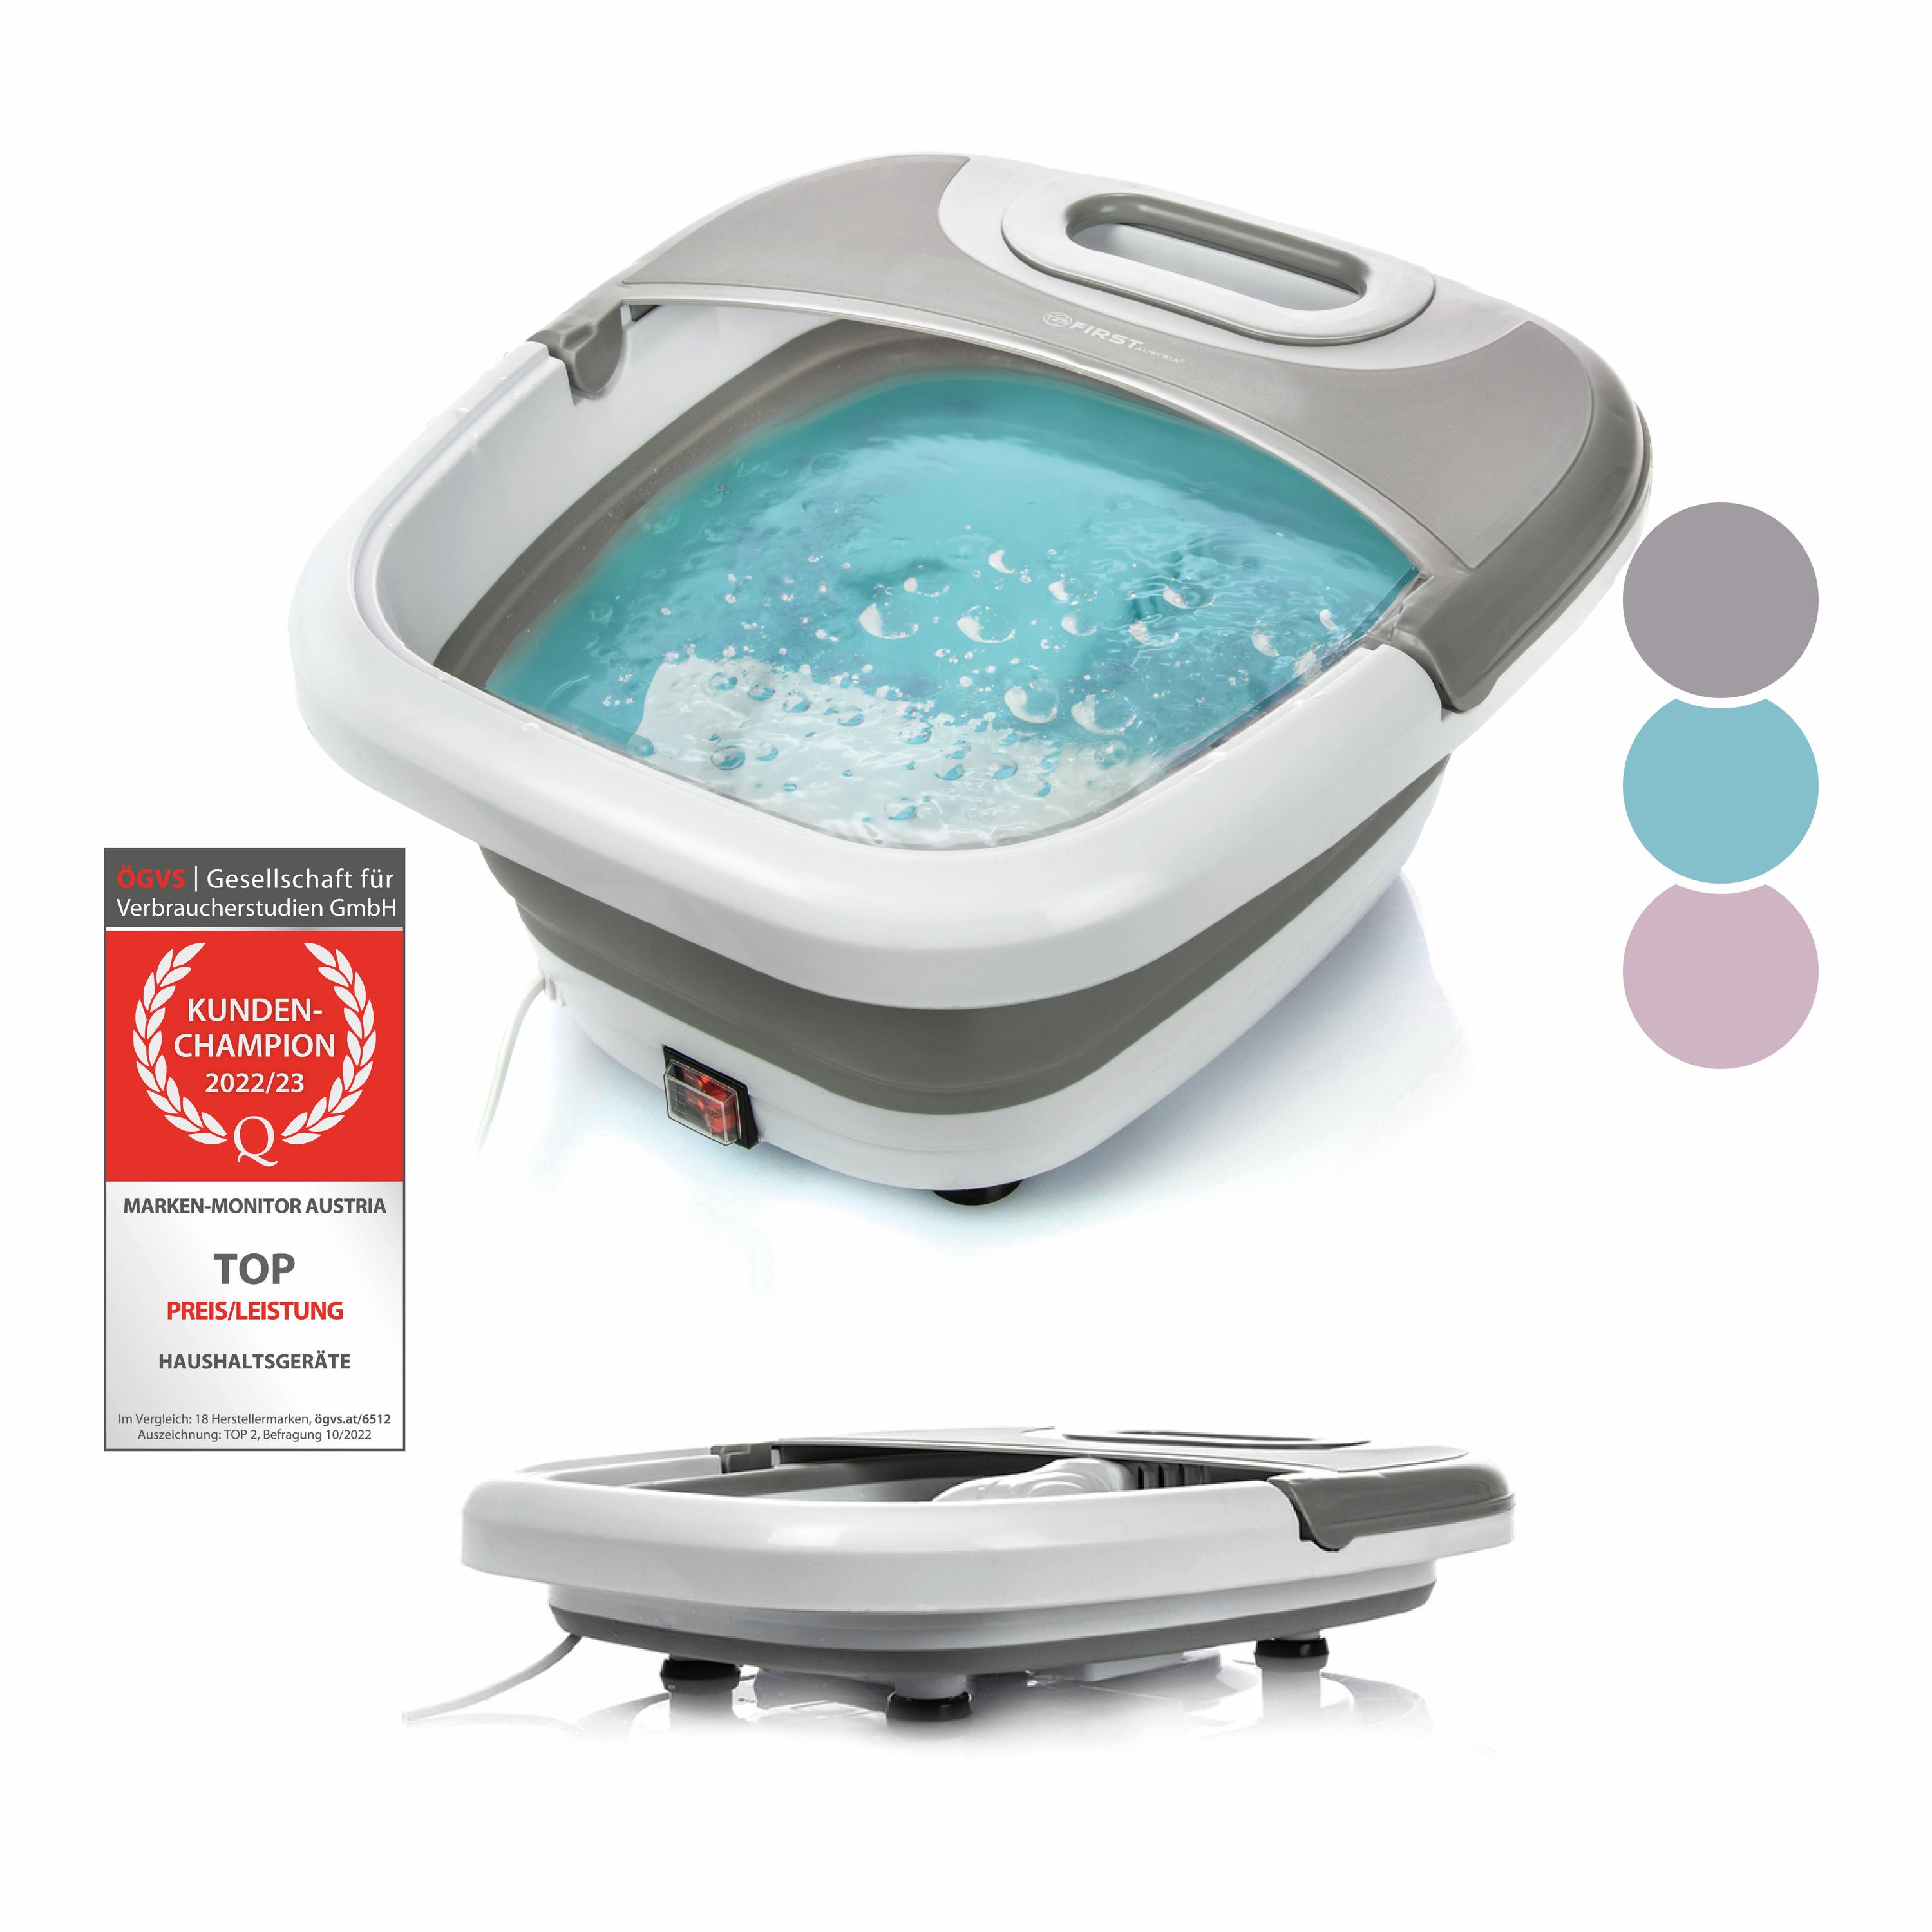 Massage foot bath | 450 watts | Infrared | Foldable